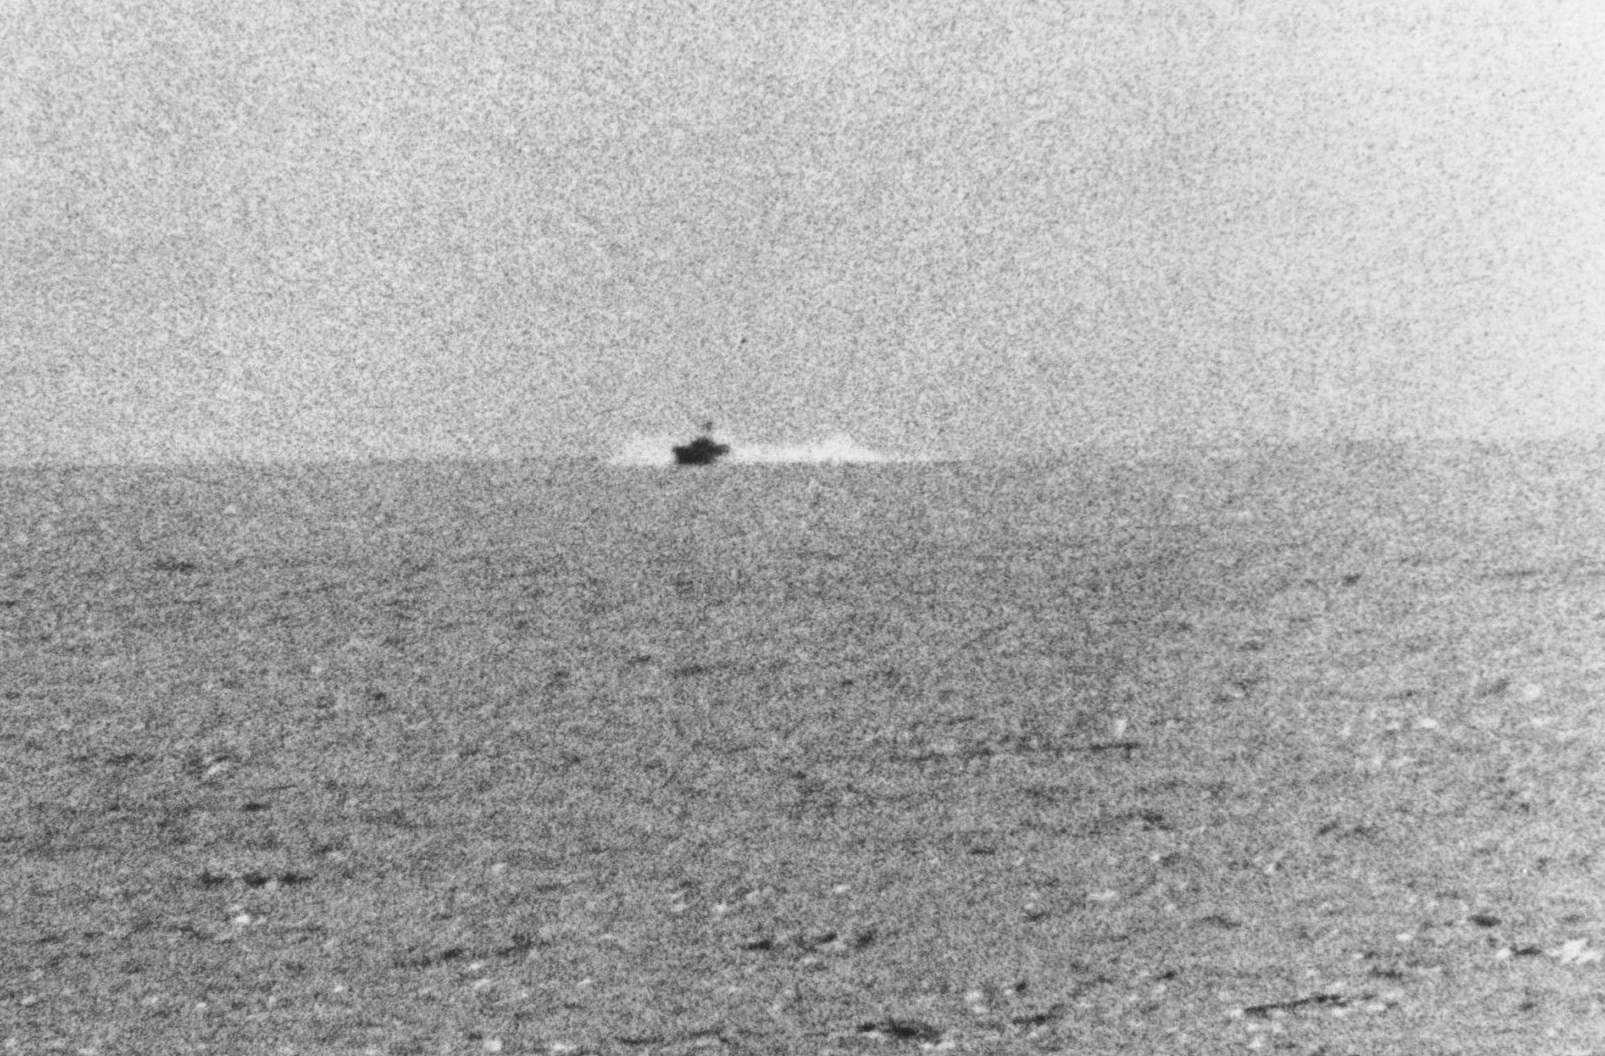 North Vietnamese Torpedo Boat Approaching the USS Maddox